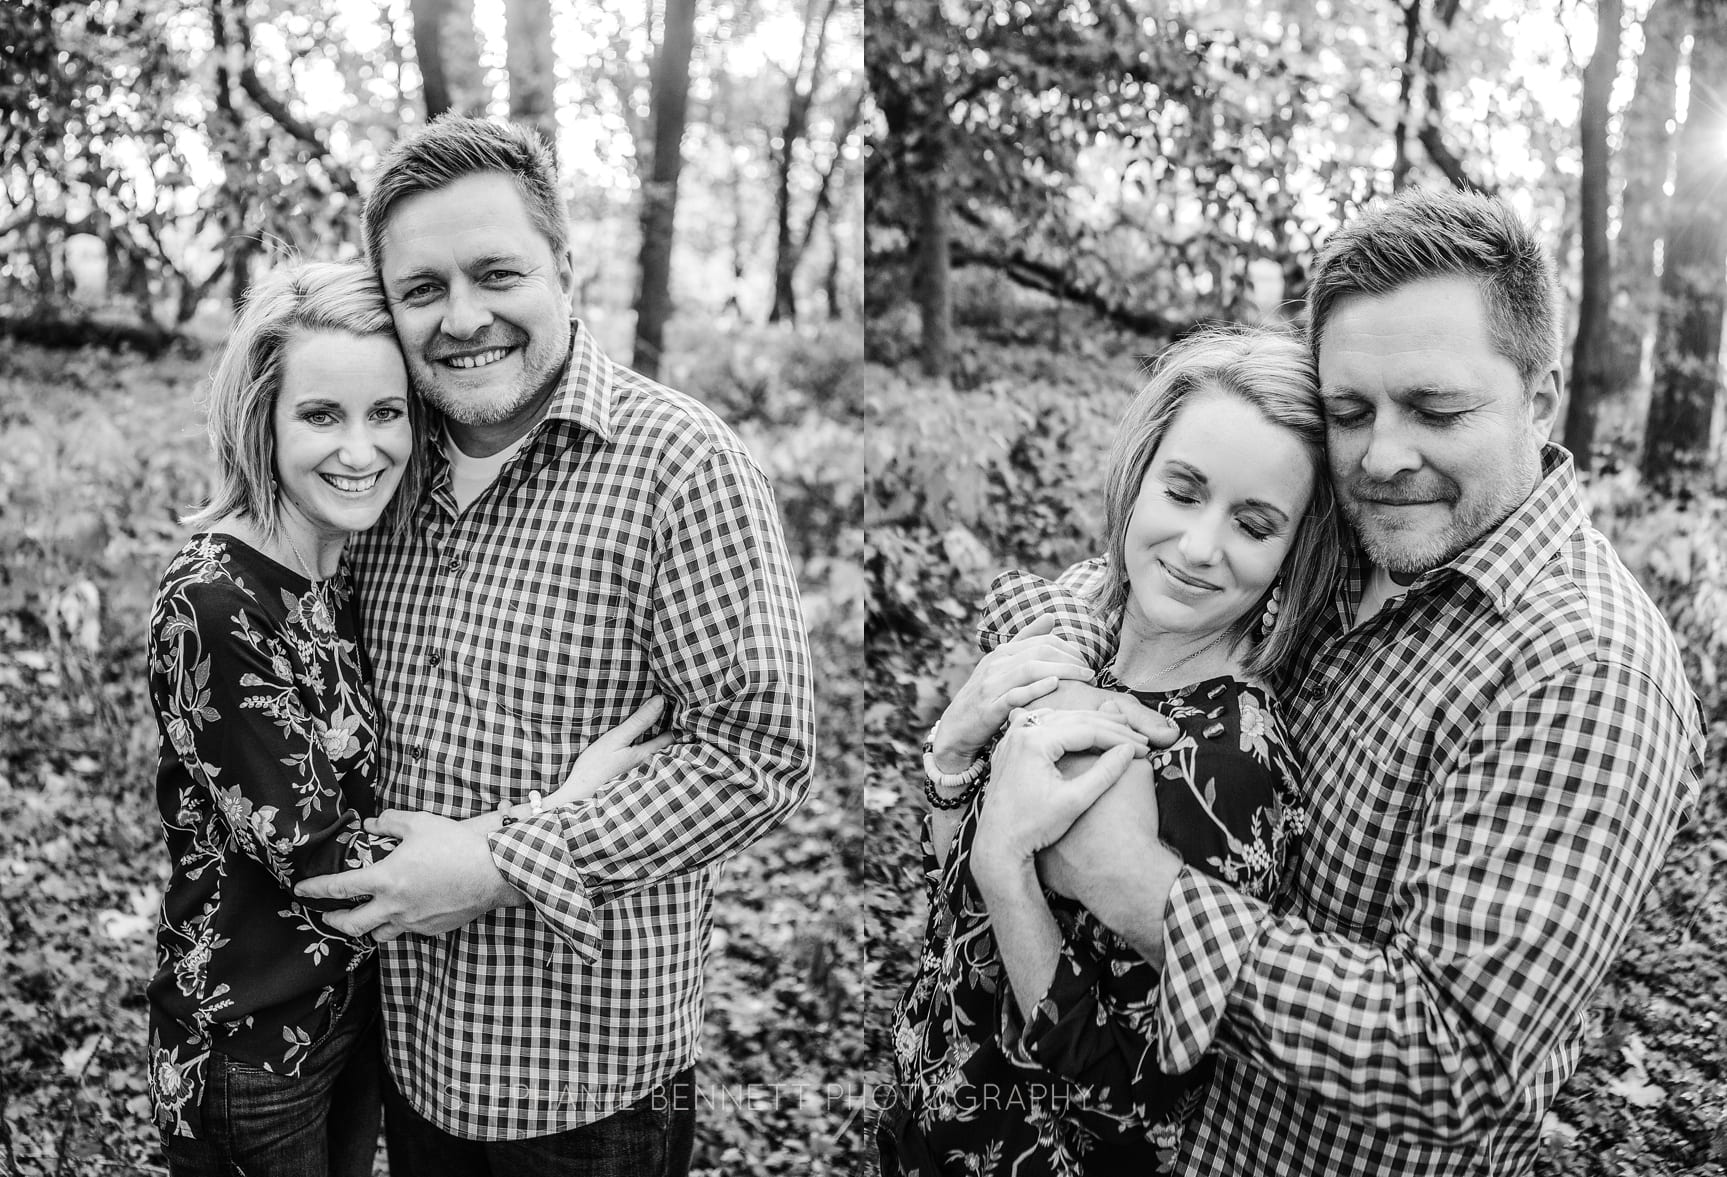 New Prauge family photography session | Northfield MN Photographer Stephanie Bennett 